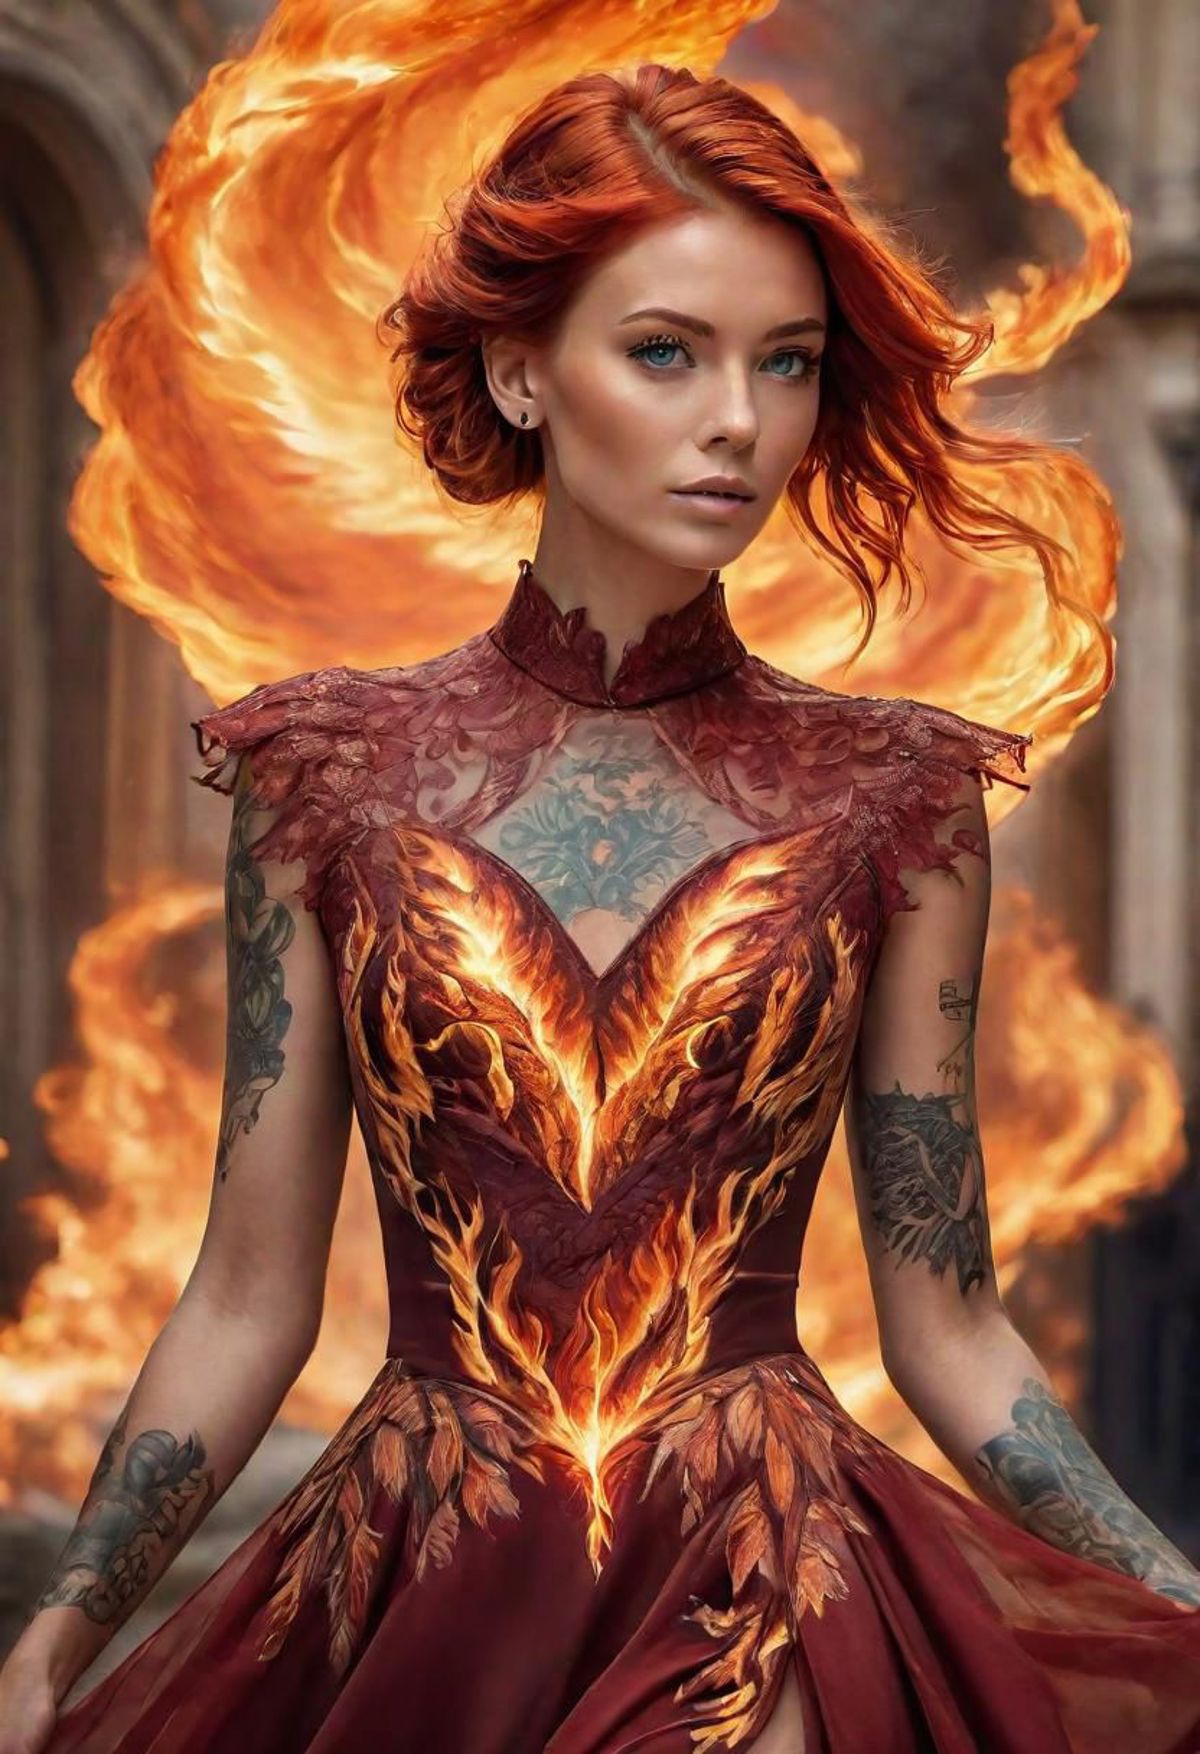 XL Phoenix Dress image by thatCreepyGuy